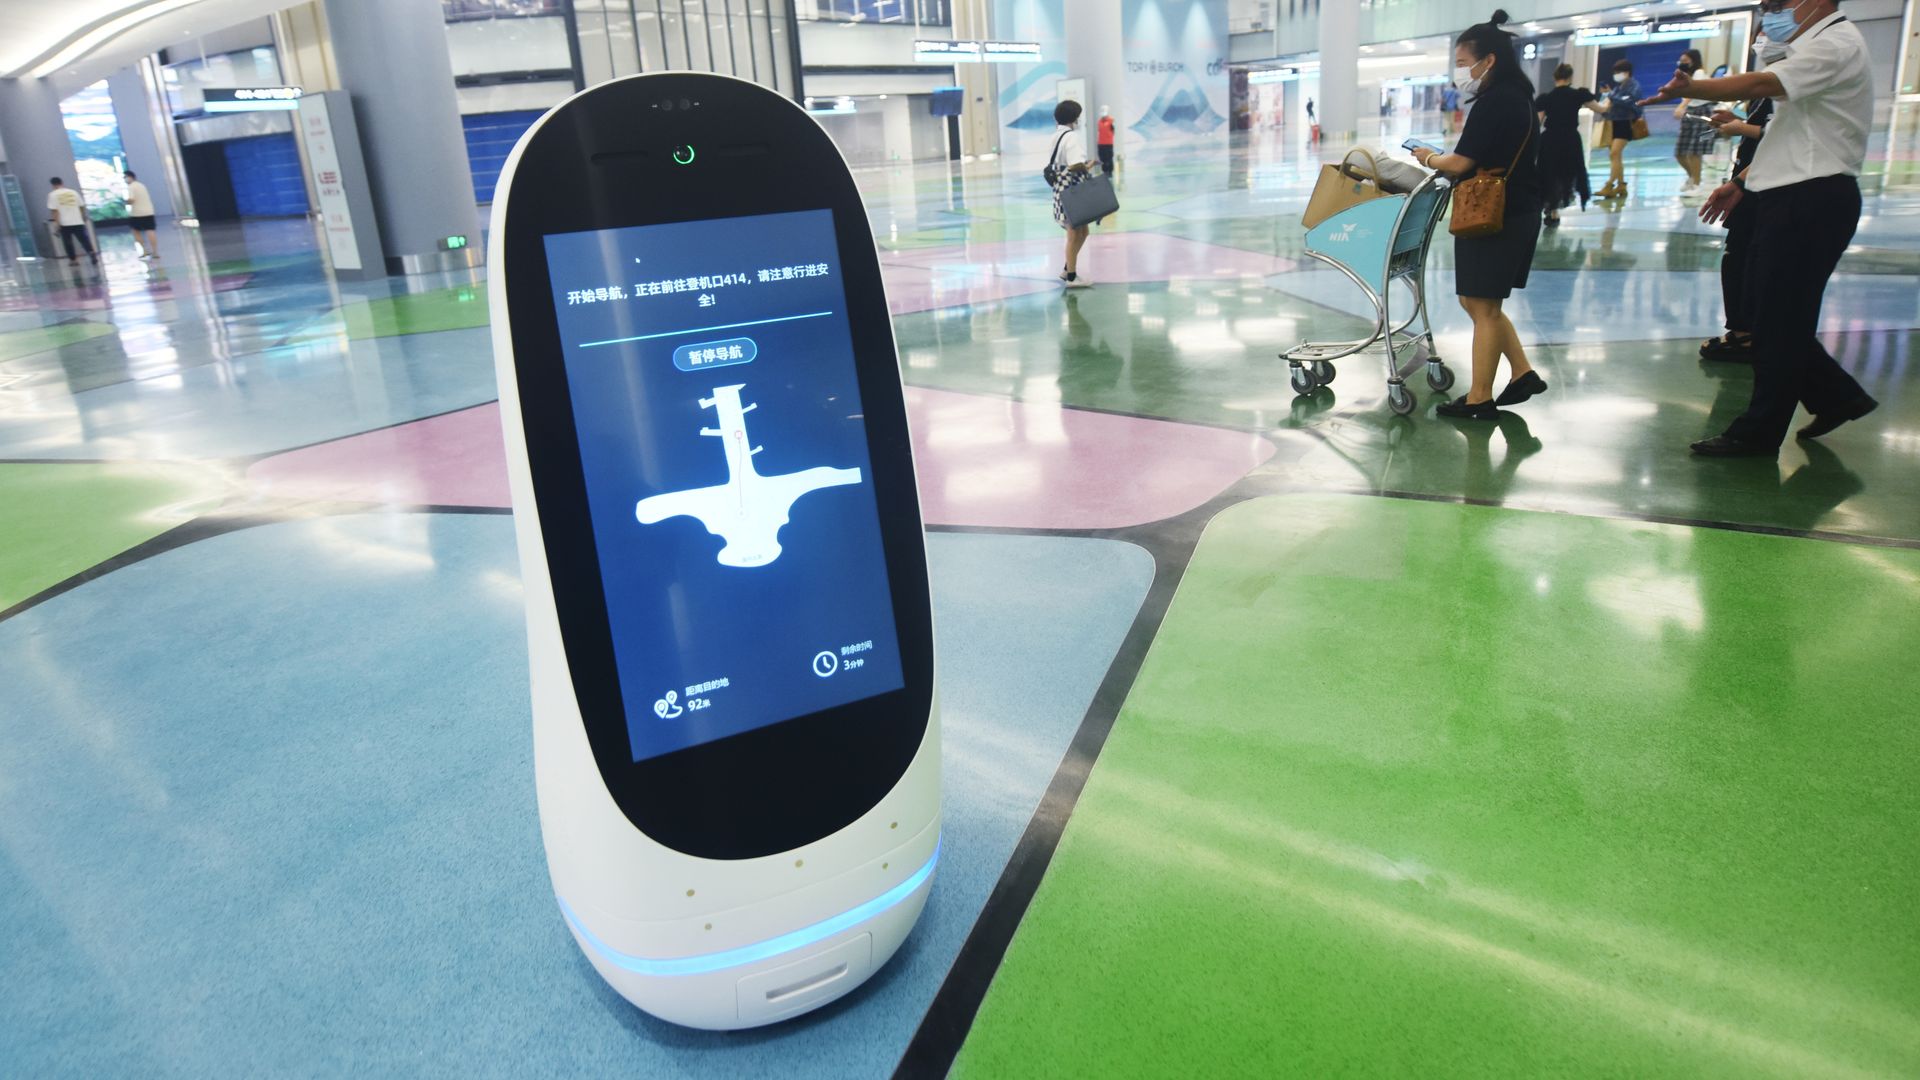    An intelligent navigation robot navigates passengers inside Terminal T4 of Xiaoshan International Airport in Hangzhou, Zhejiang Province, China.